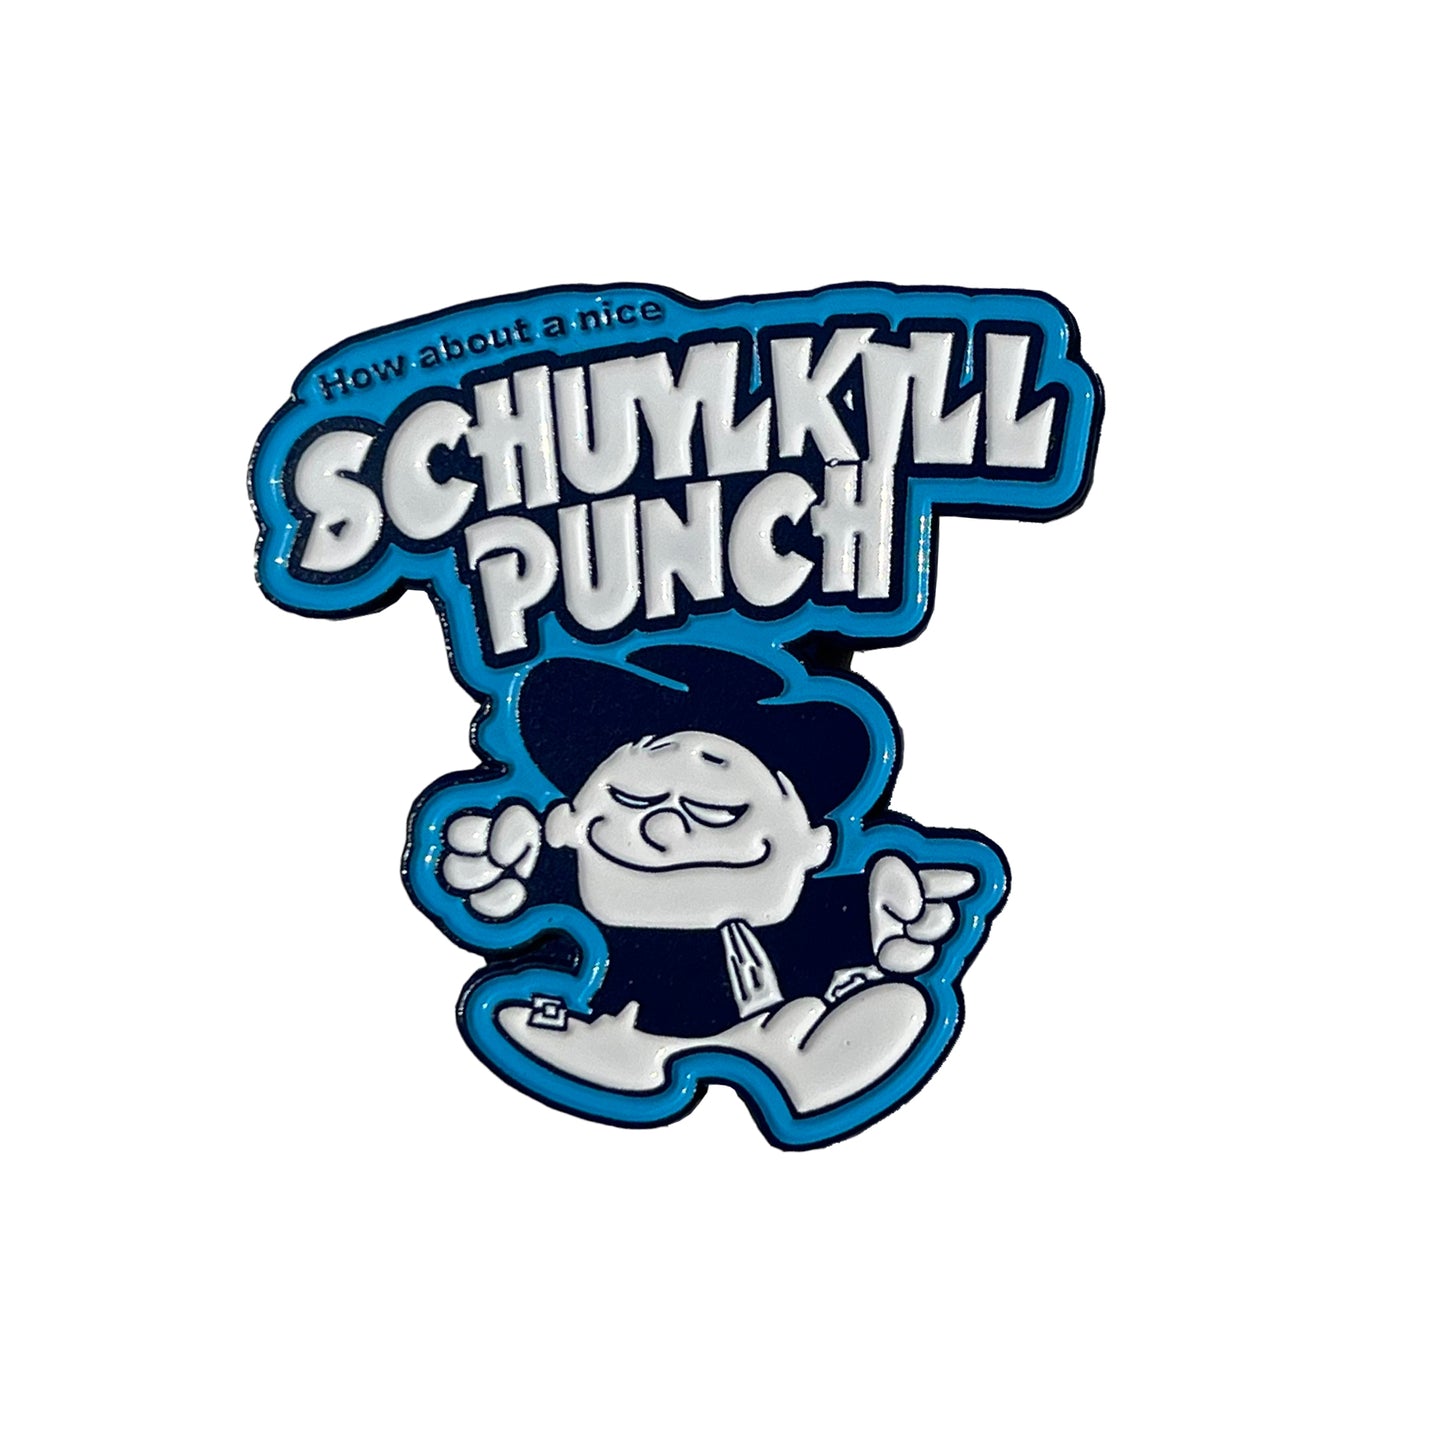 Schuylkill Punch Pin